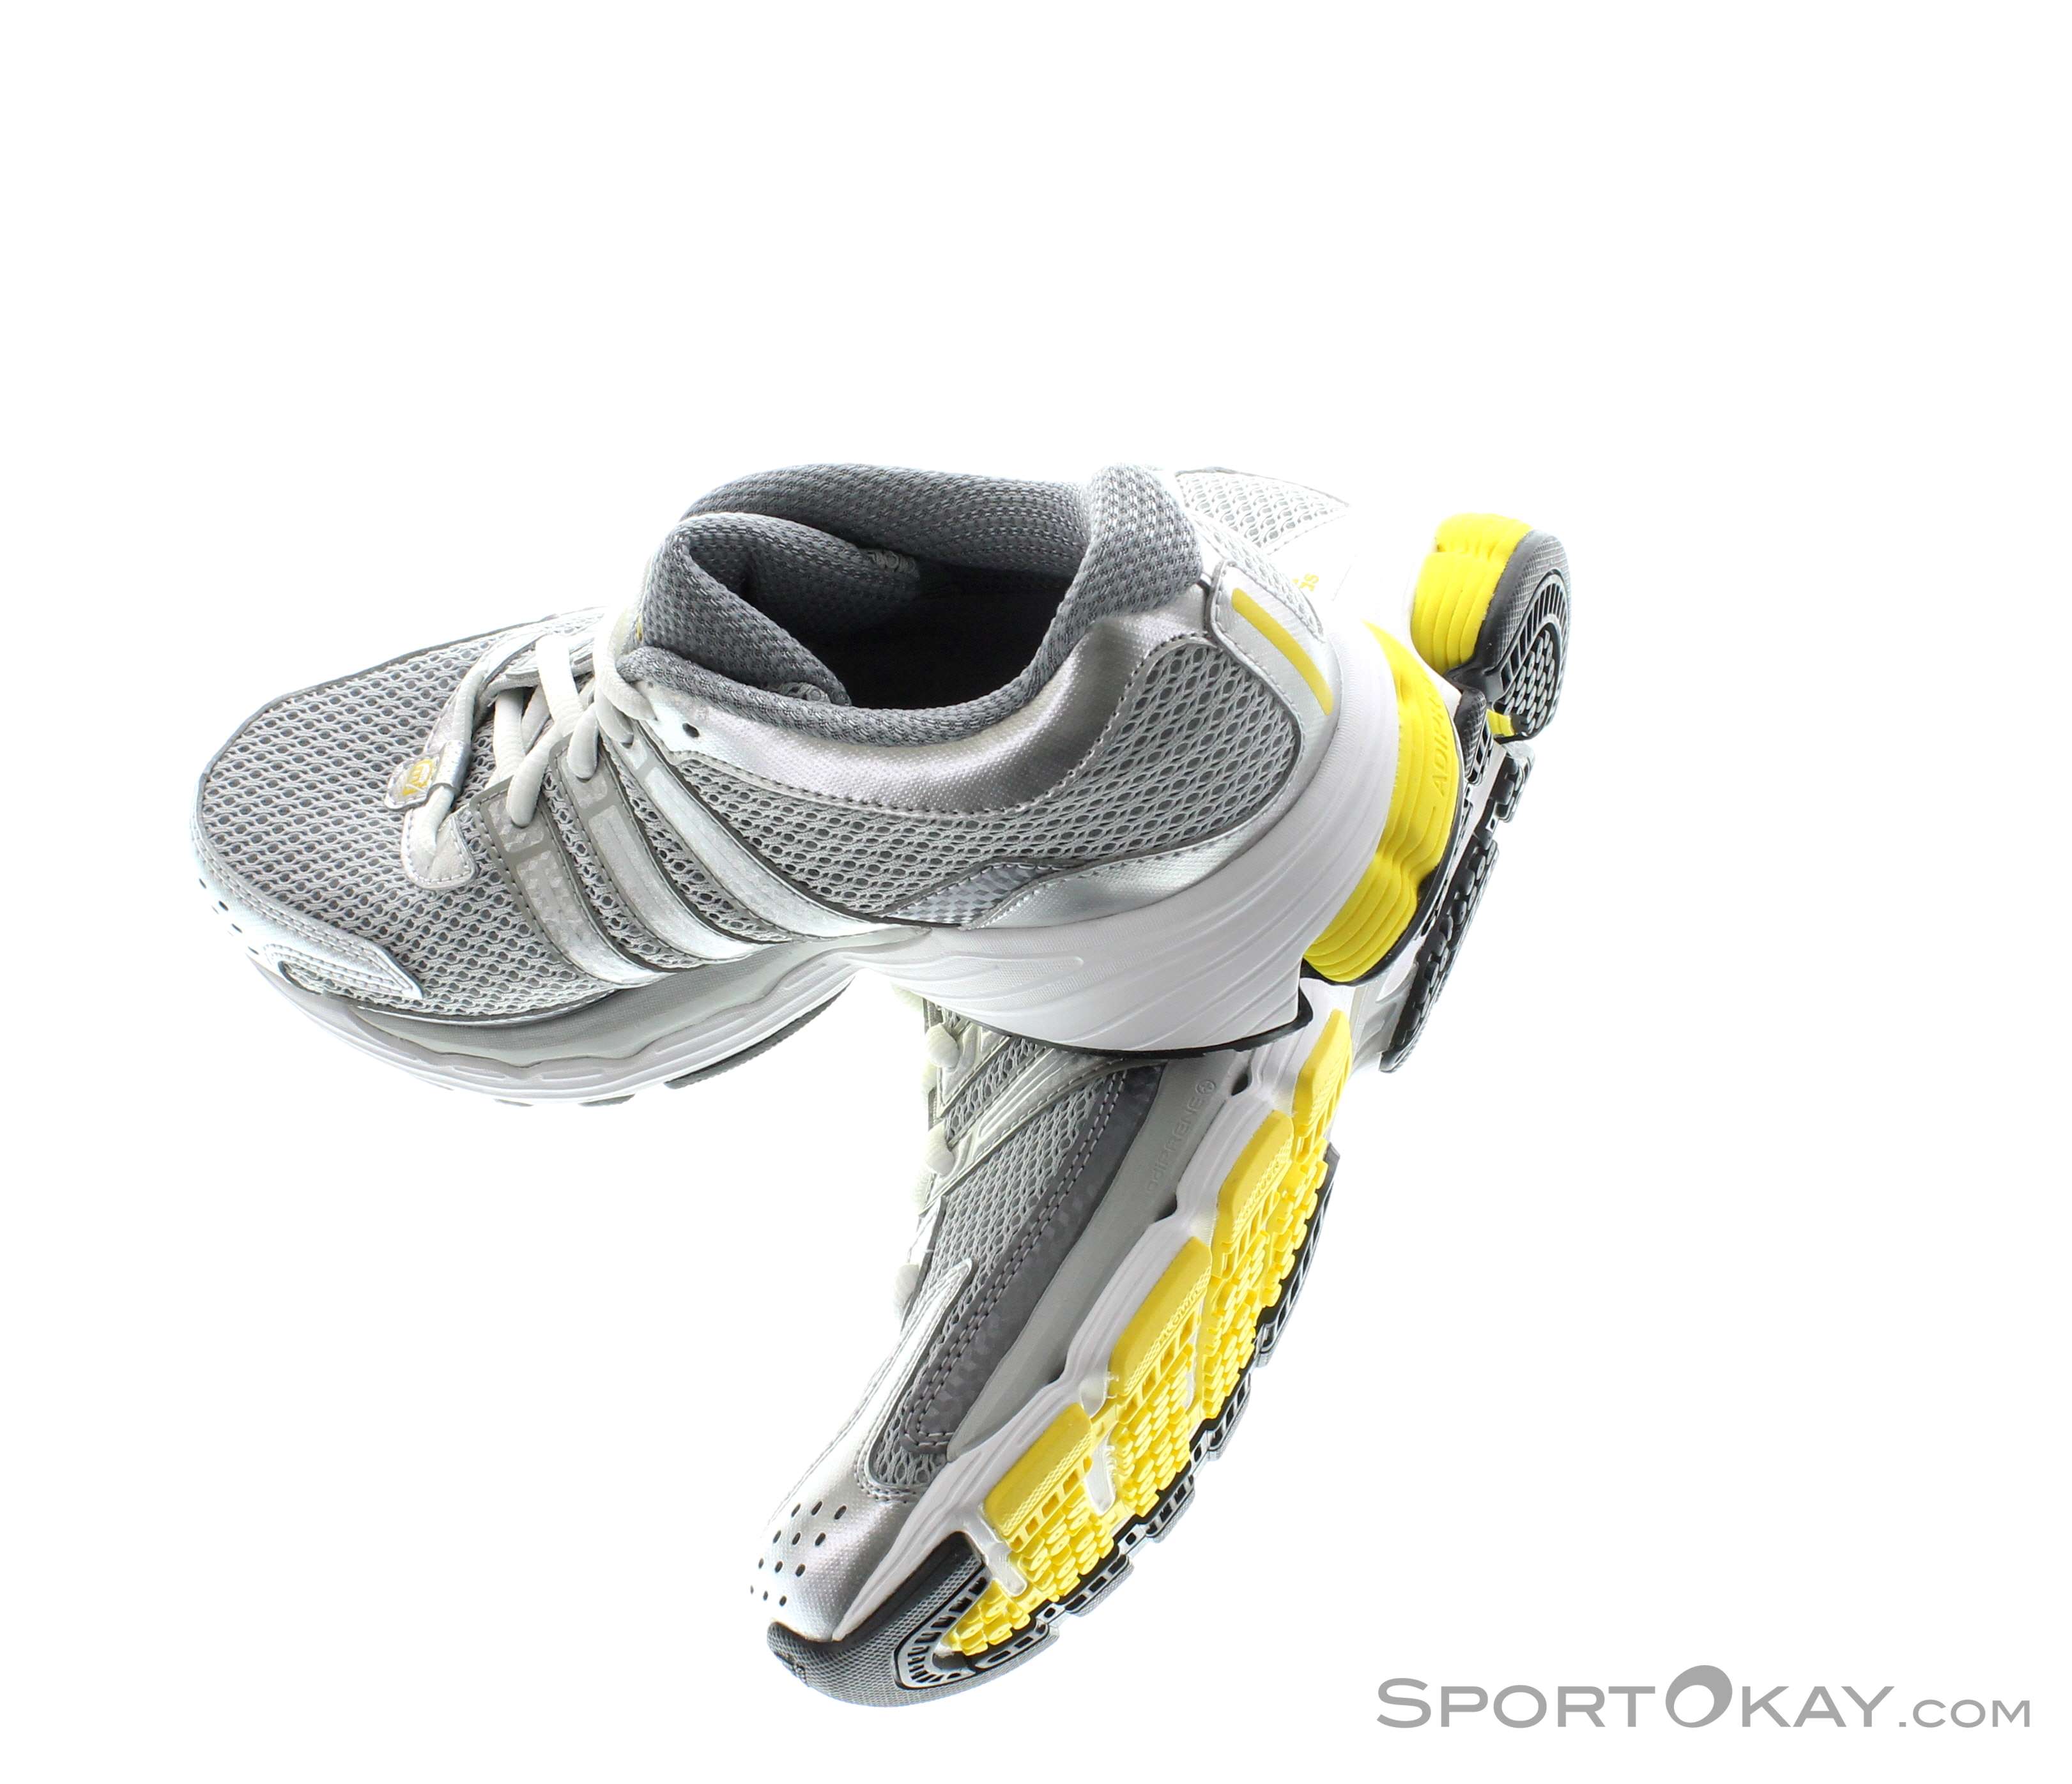 Adidas Questar Cushion W Running Shoes All-Round Running Shoes - Running Shoes - Running - All